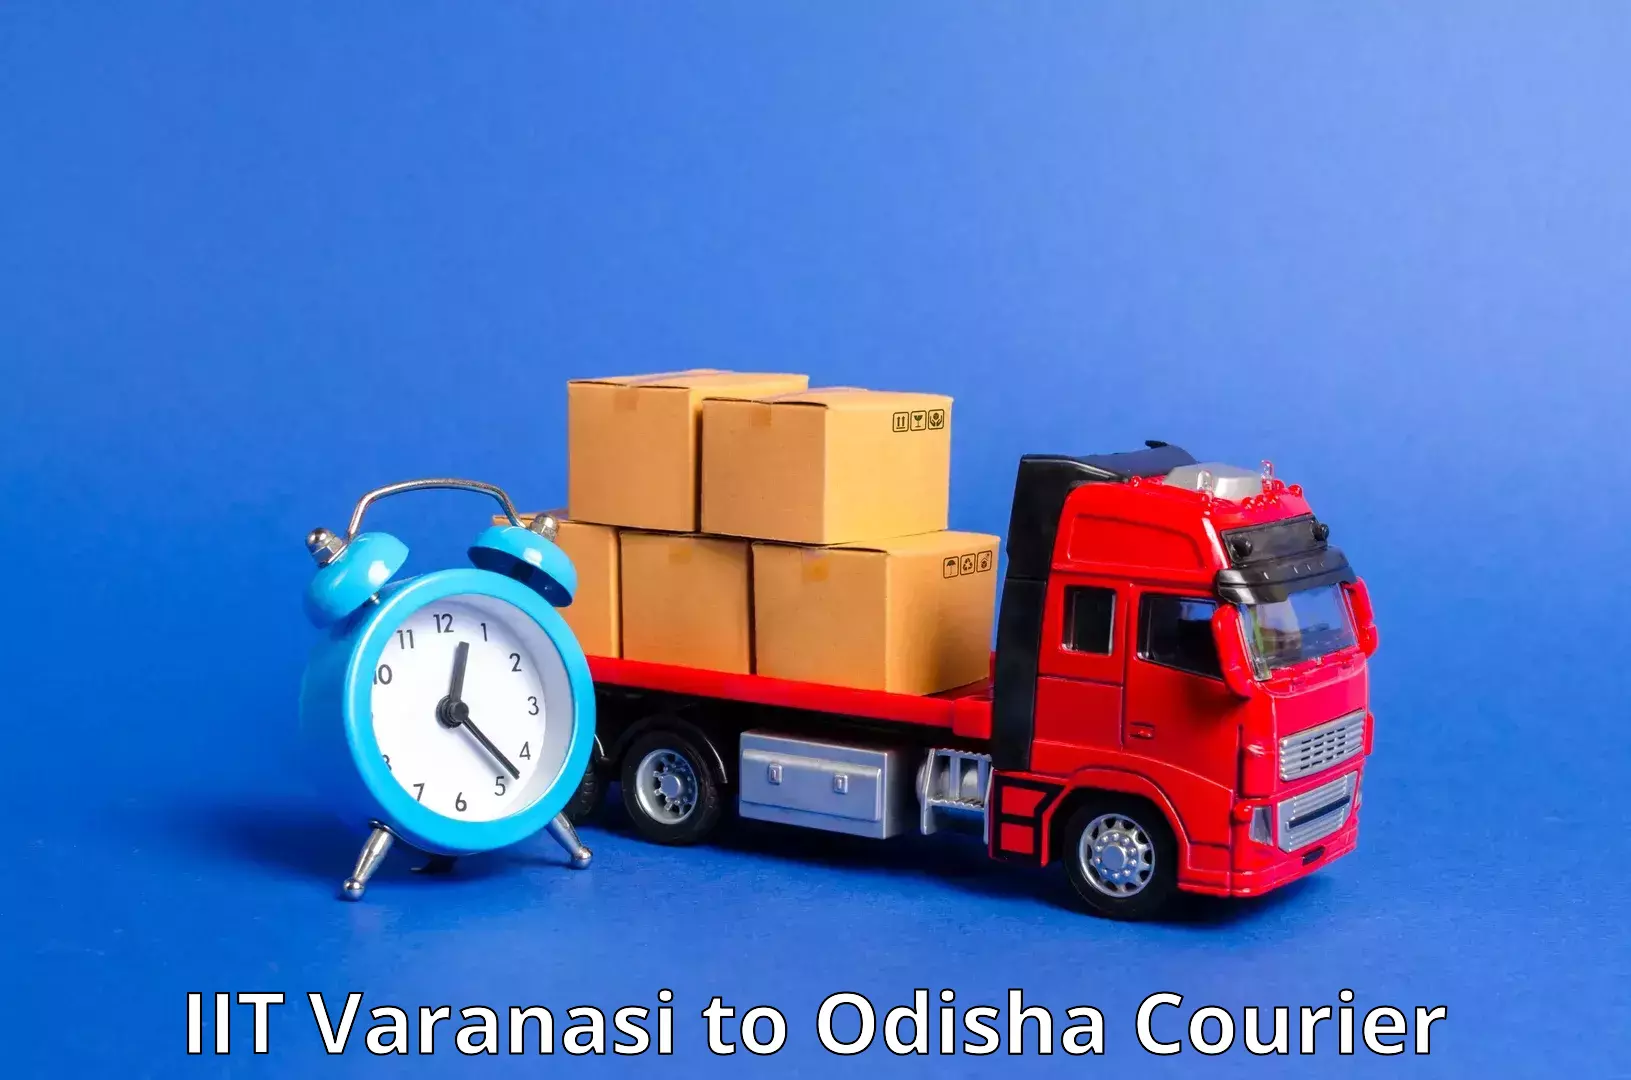 Doorstep delivery service IIT Varanasi to Birmitrapur